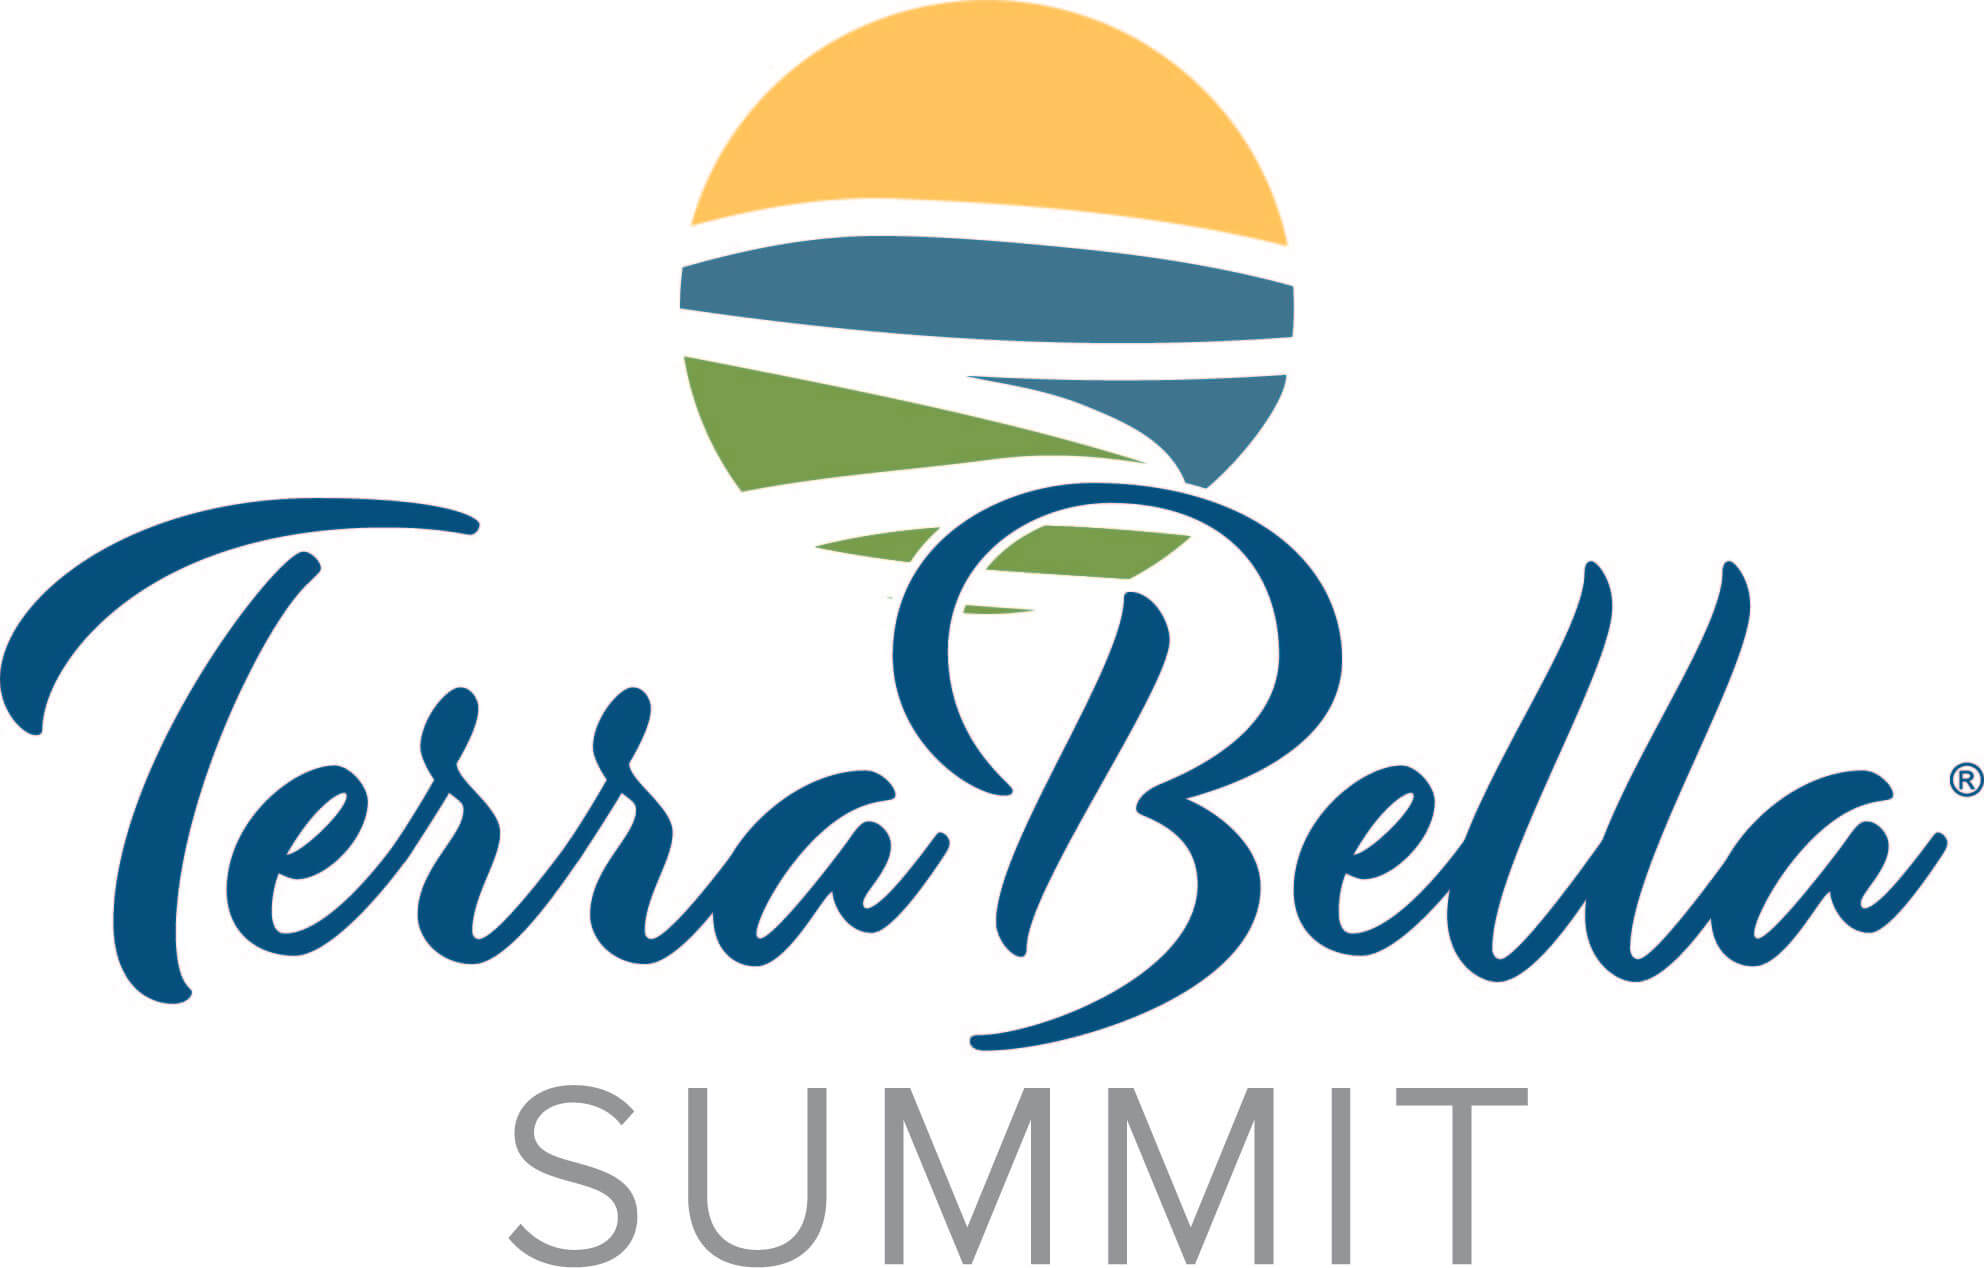 TerraBella Summit Stacked